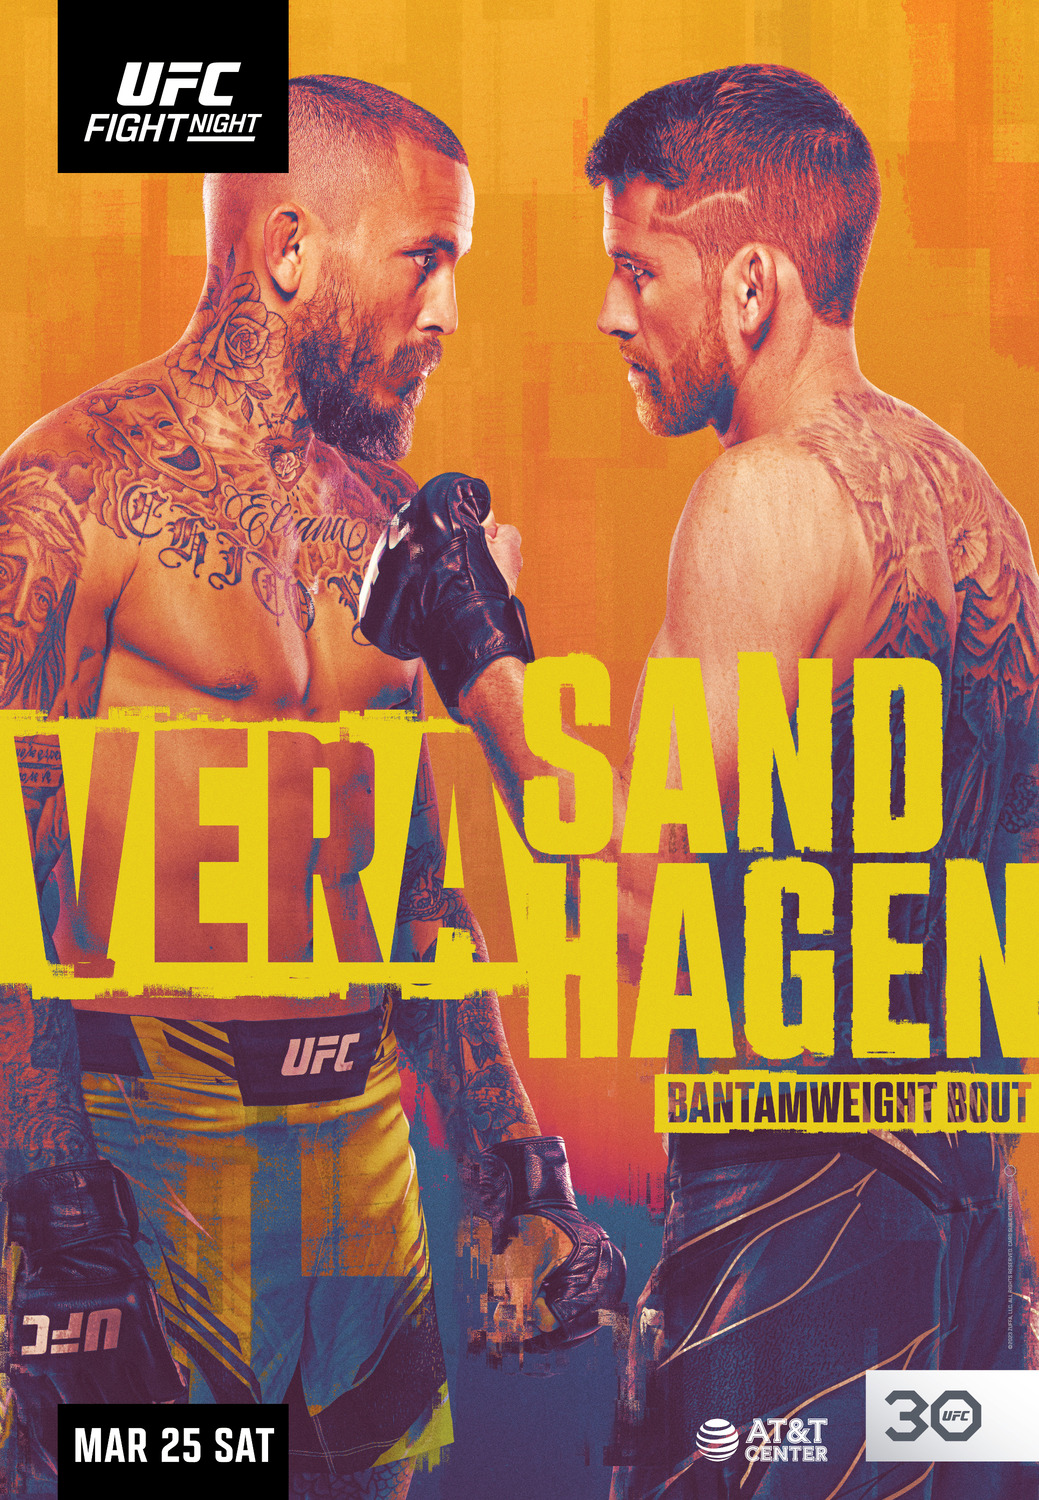 Extra Large TV Poster Image for UFC Fight Night: Vera vs Sandhagen 